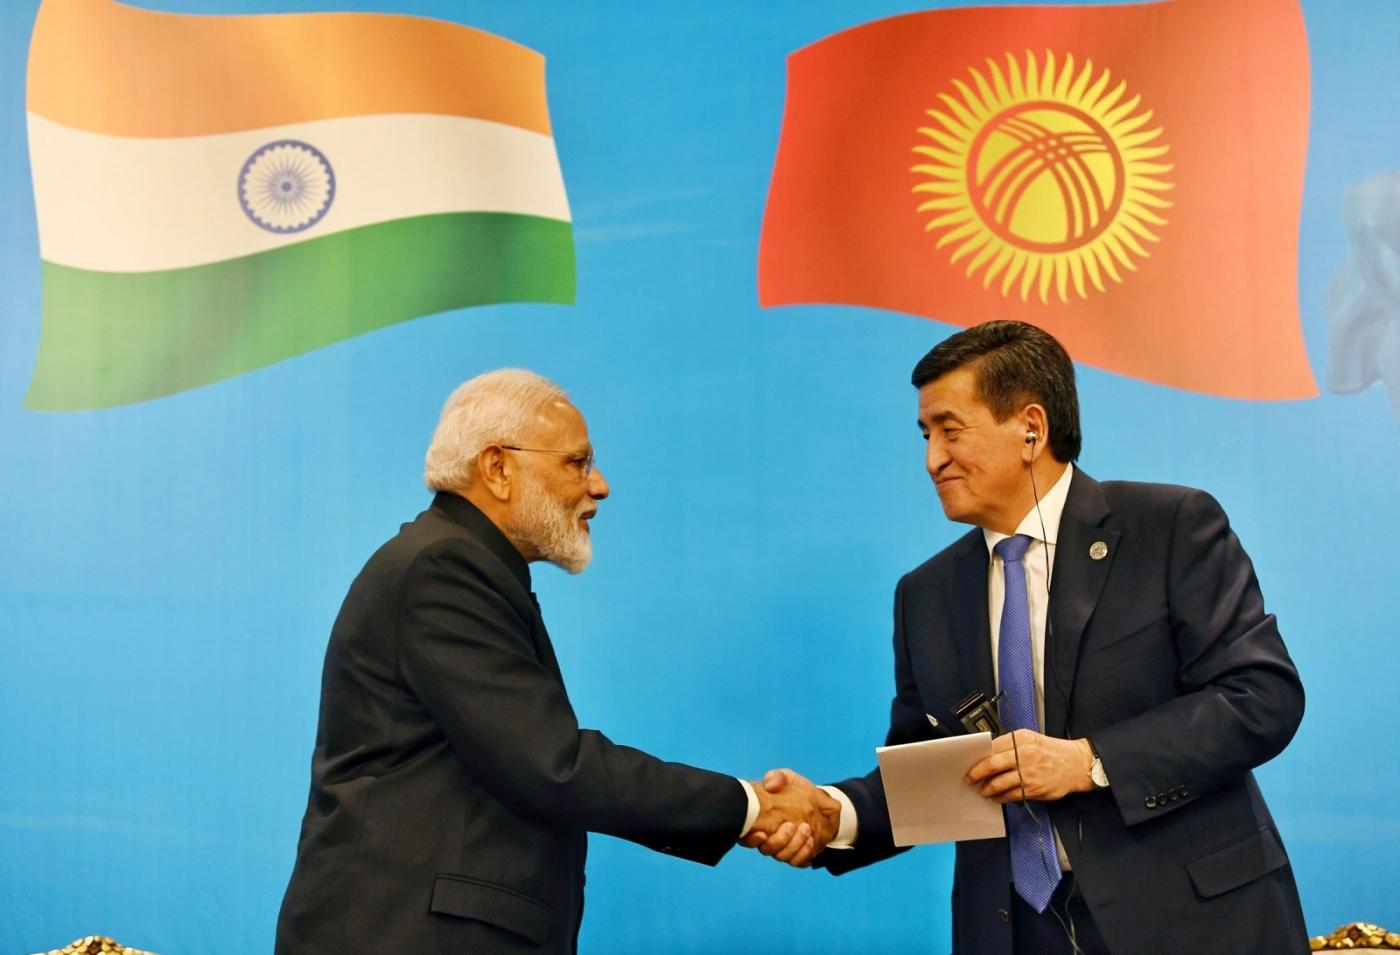 Bishkek: Prime Minister Narendra Modi and Kyrgyzstan President Sooronbay Jeenbekov at the inauguration of India-Kyrgy Business Forum in Bishkek, Kyrgyzstan on June 14, 2019. (Photo: IANS/PIB) by .